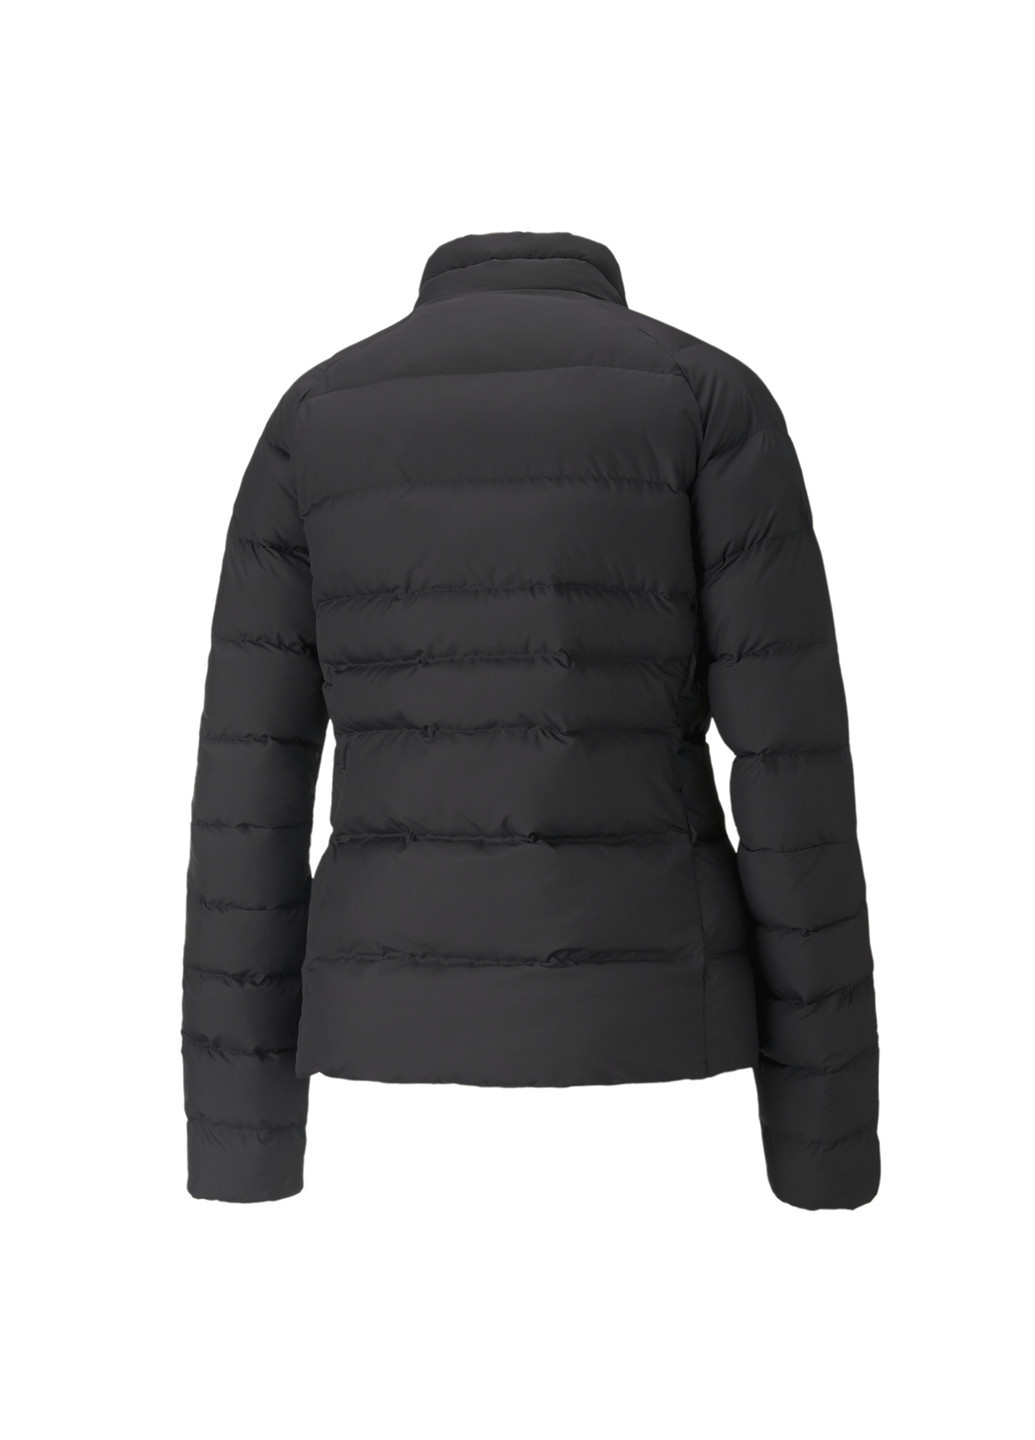 Чорна демісезонна куртка warmcell lightweight women's jacket Puma